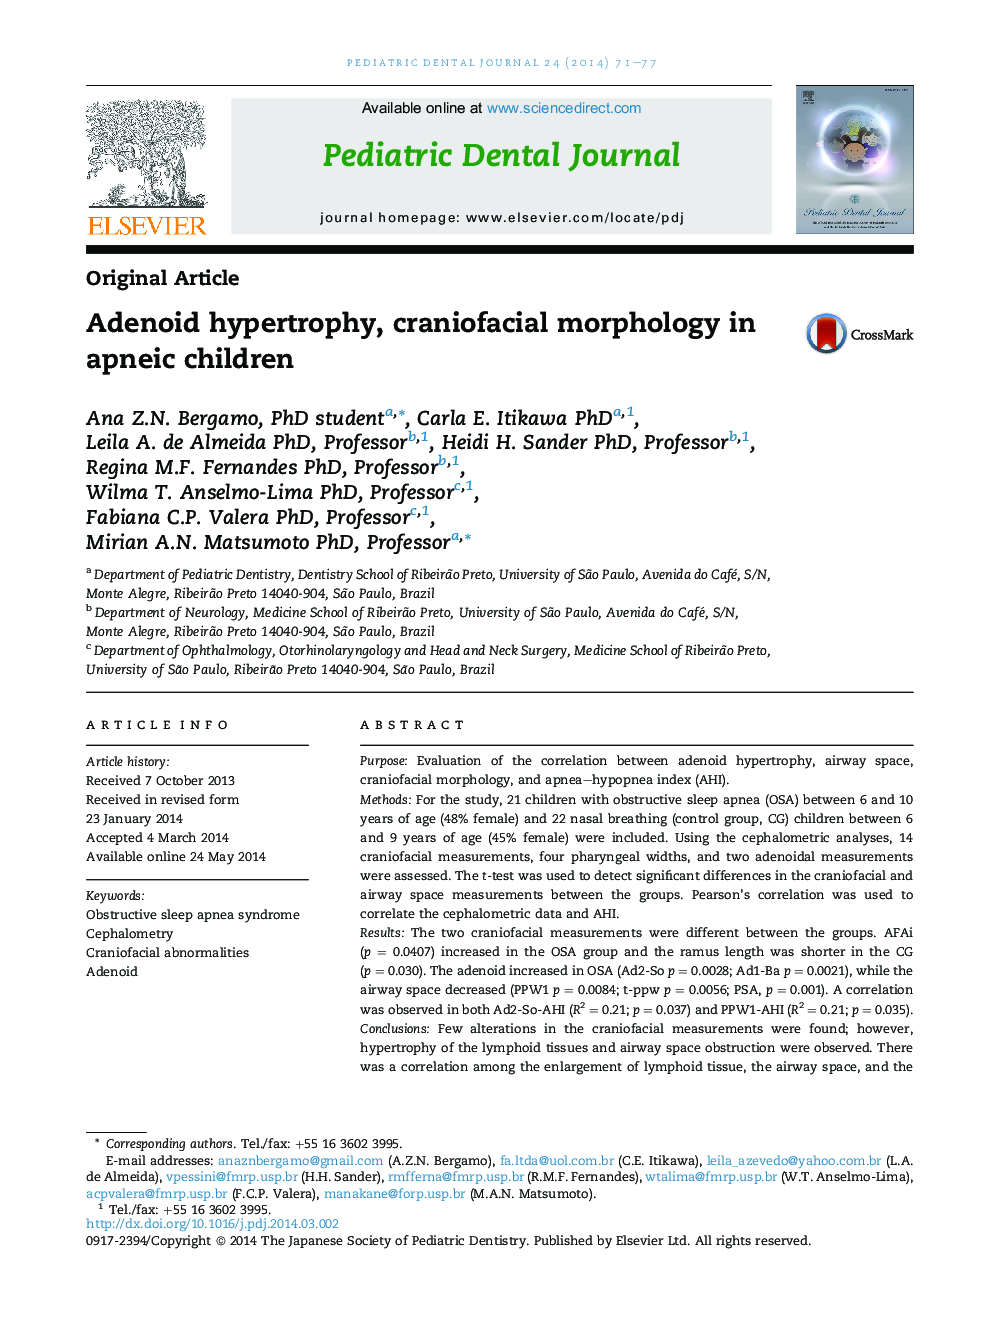 Adenoid hypertrophy, craniofacial morphology in apneic children